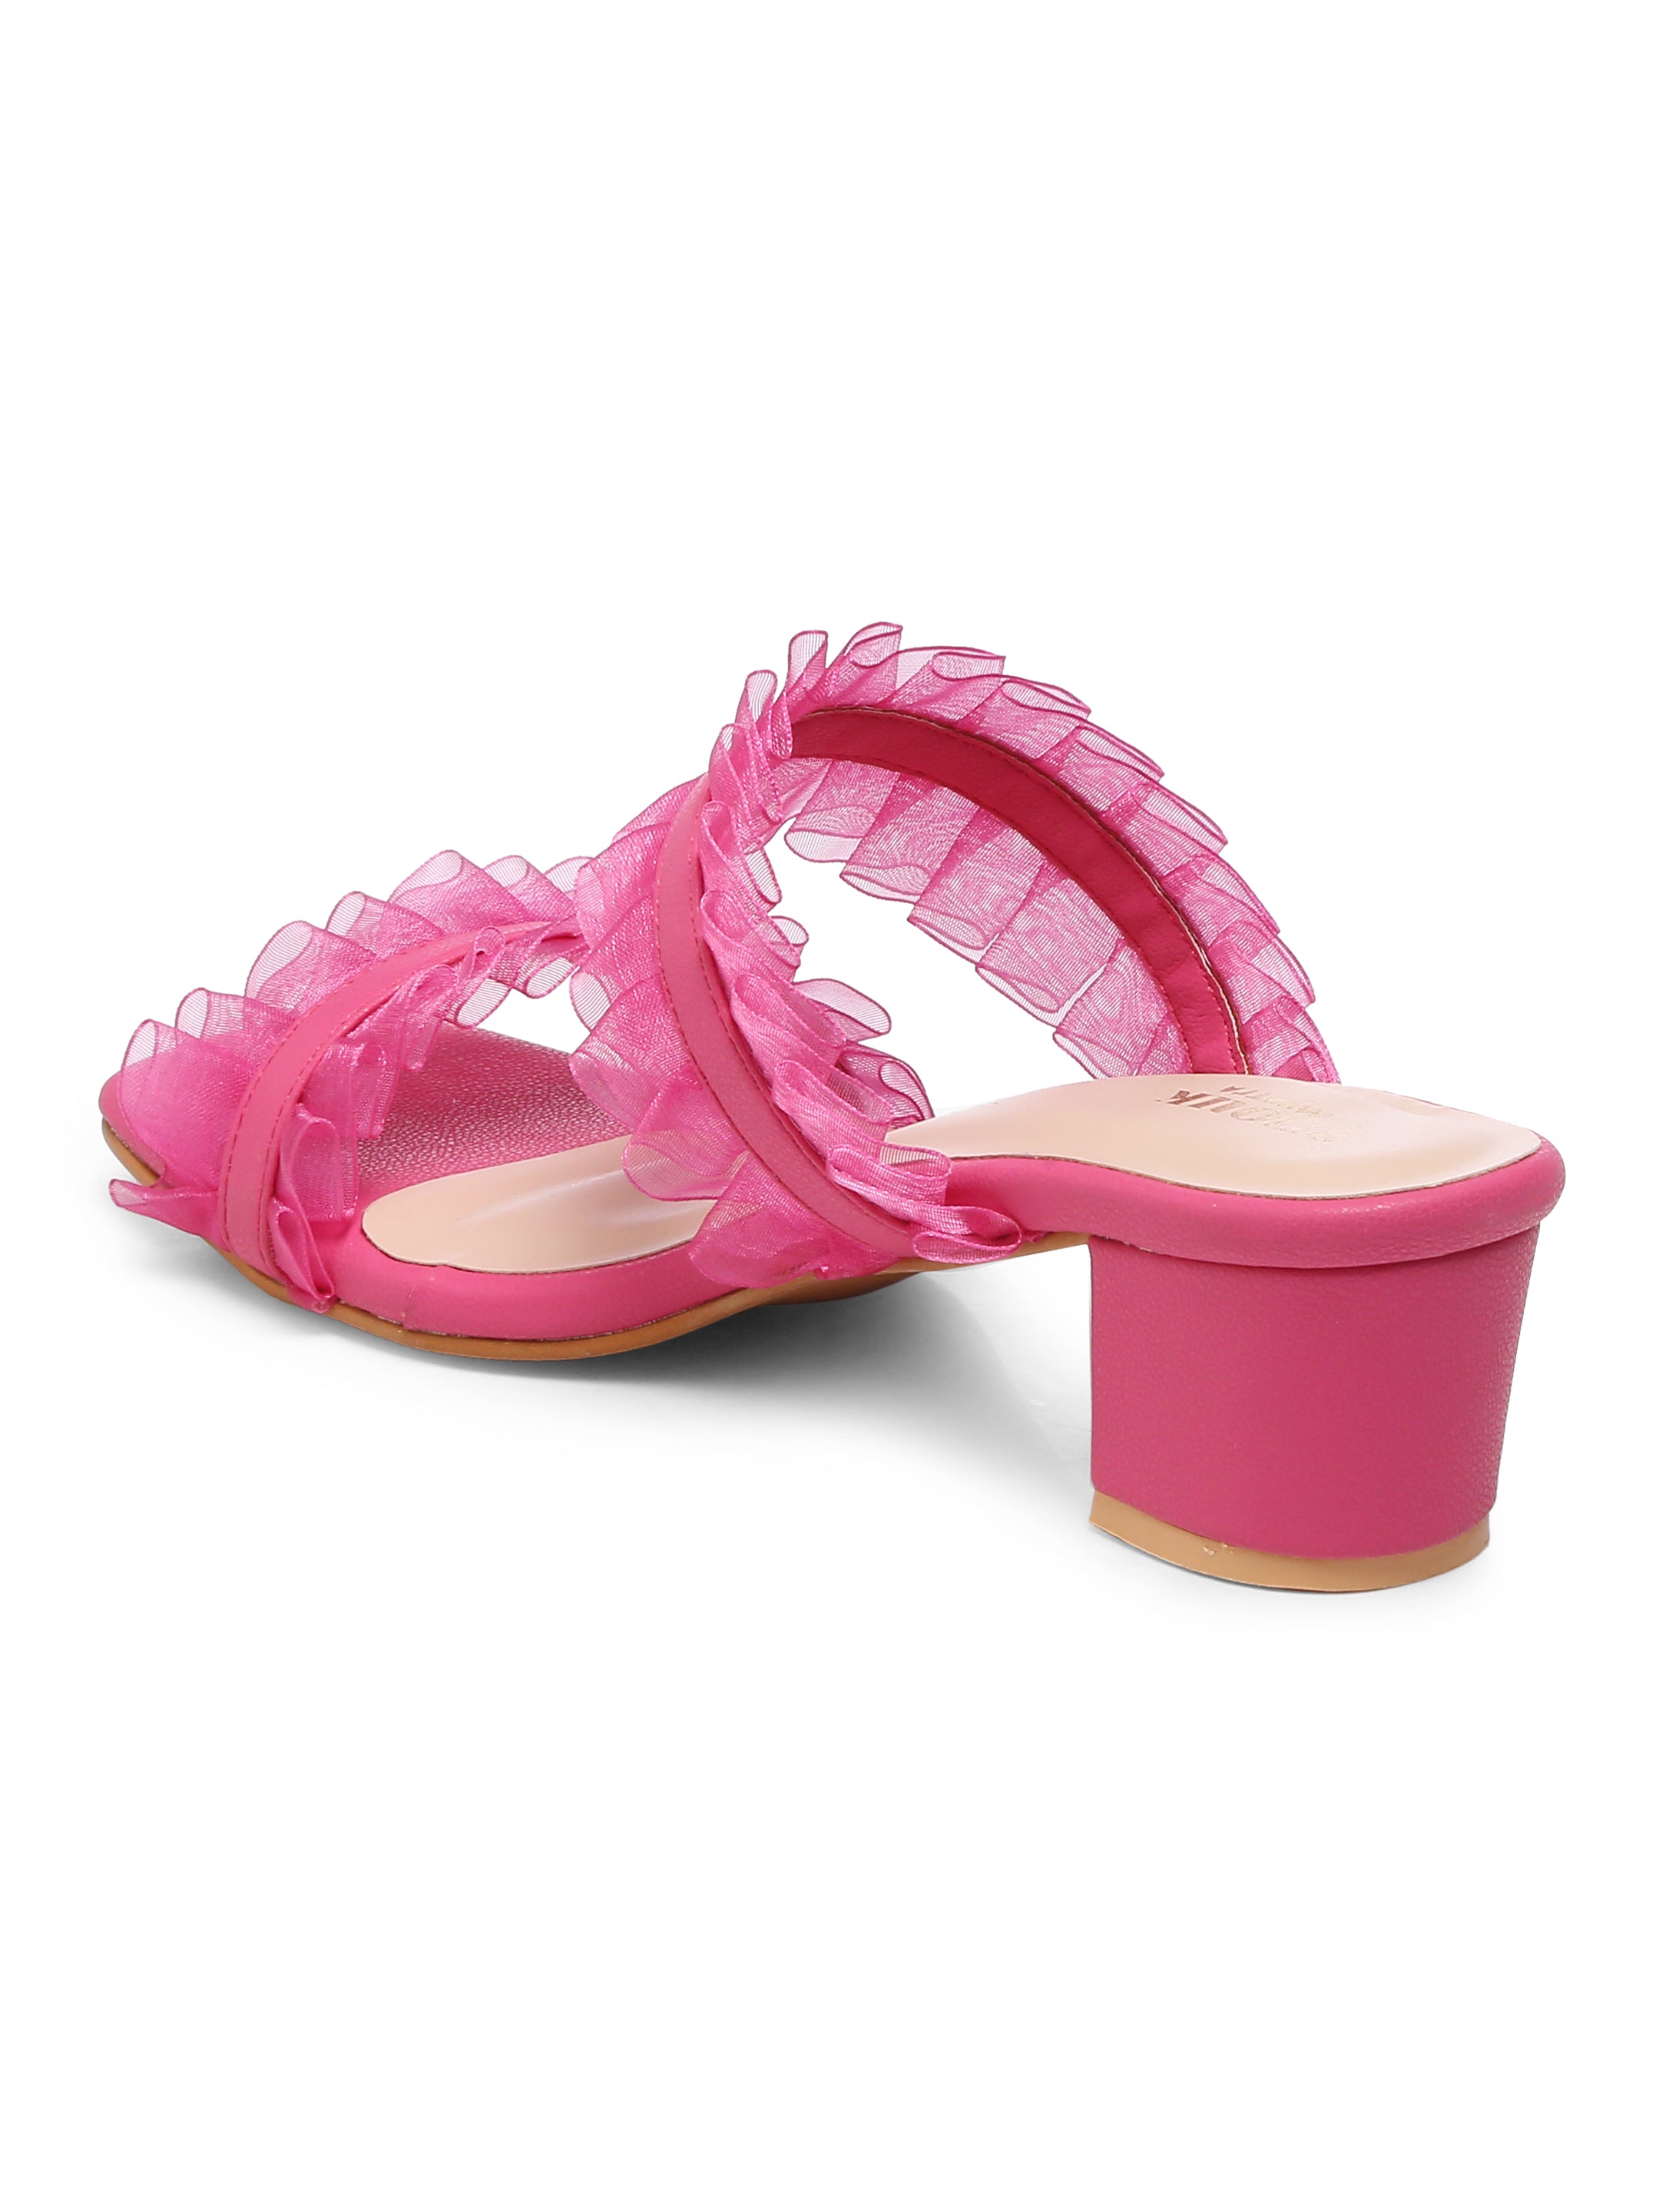 GNIST Hot pink Double Strap Ruffle Block Heels